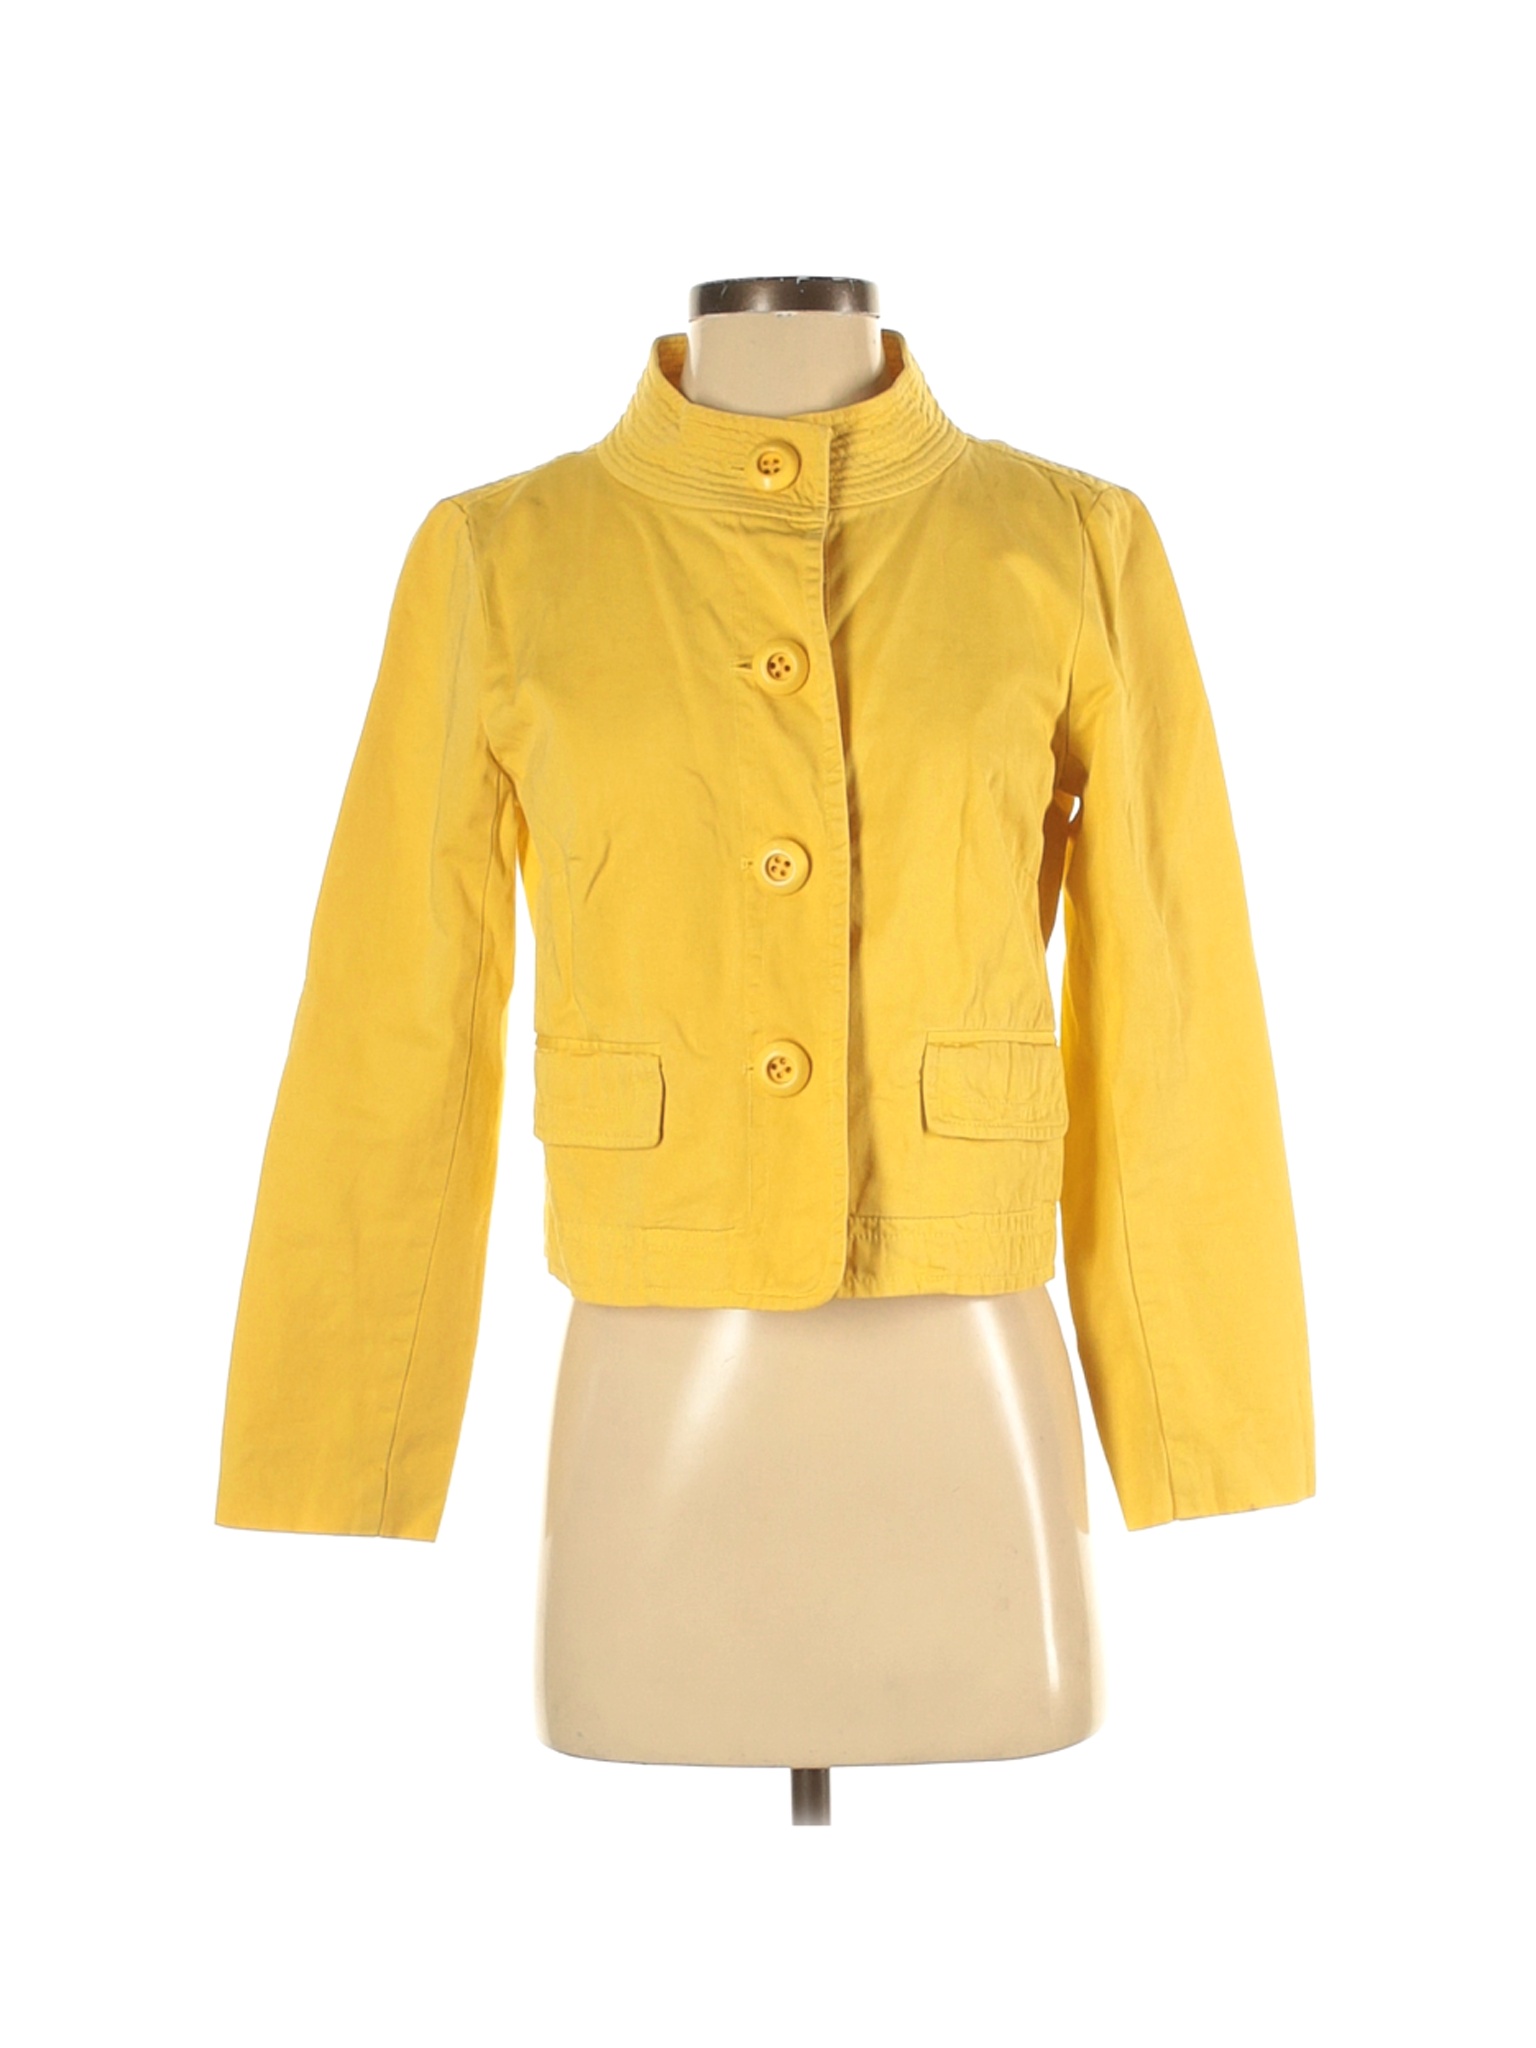 J.Crew Women Yellow Denim Jacket 4 | eBay